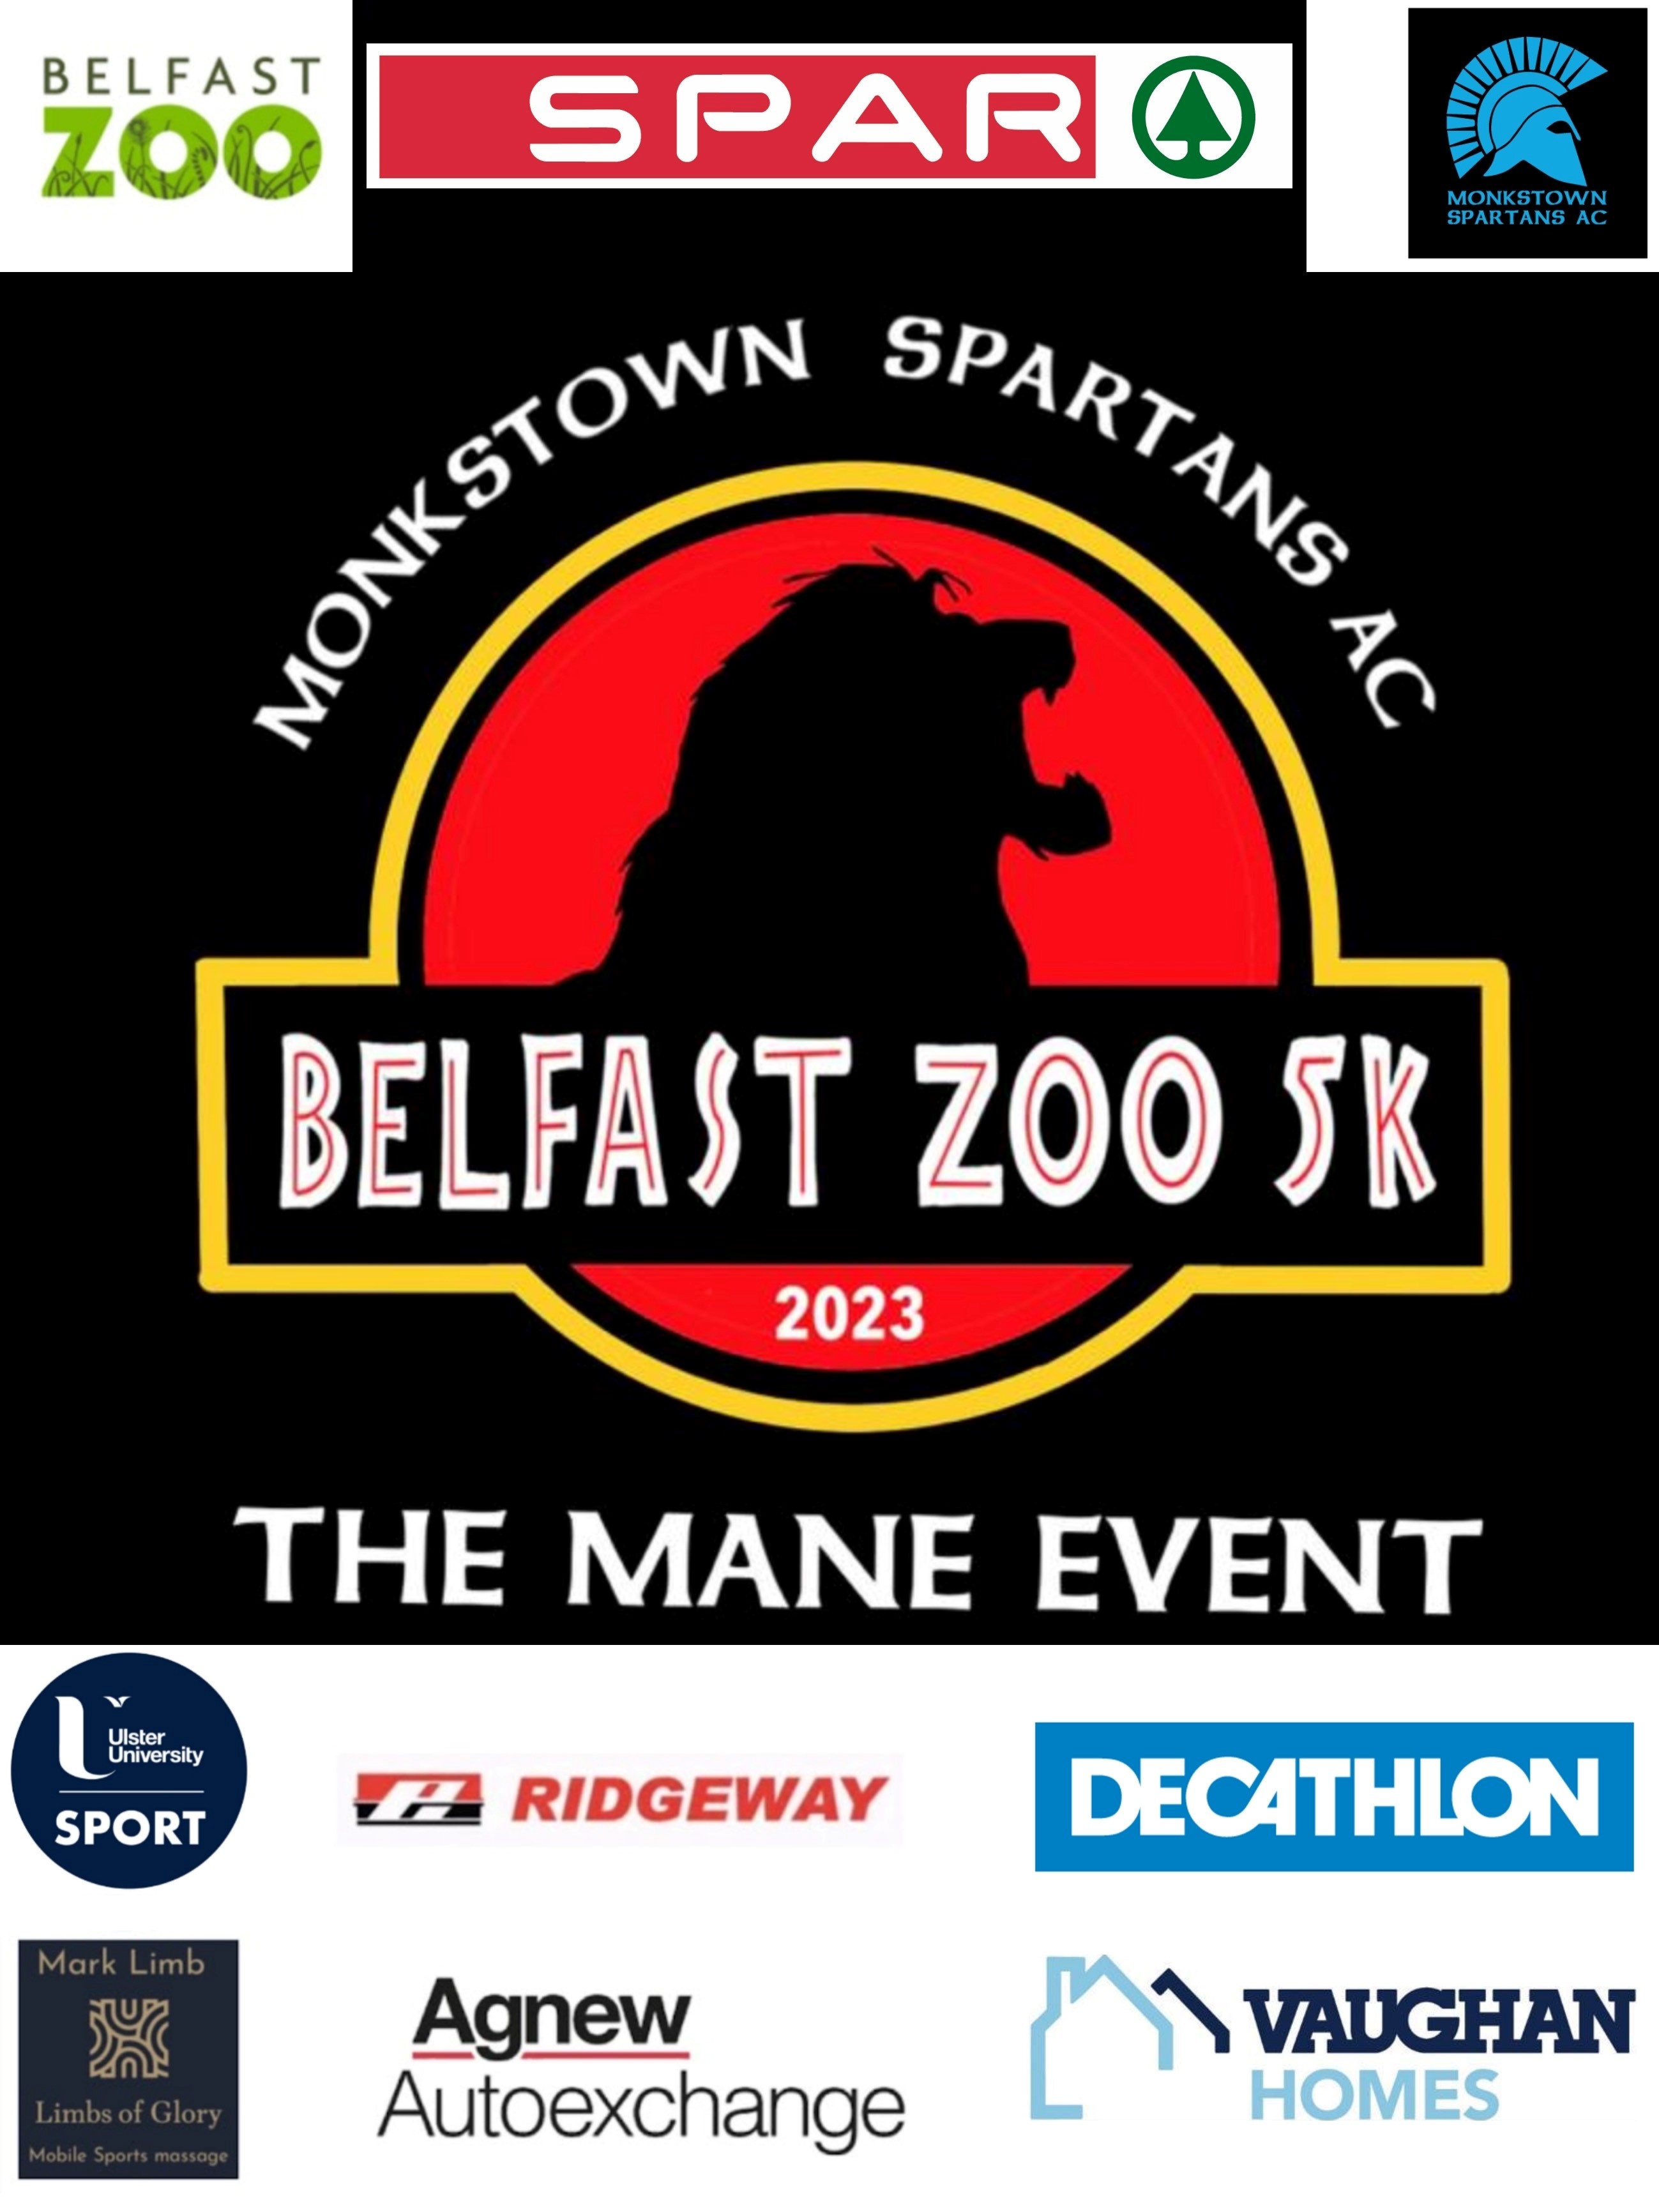 Monkstown Spartans Belfast Zoo 5k